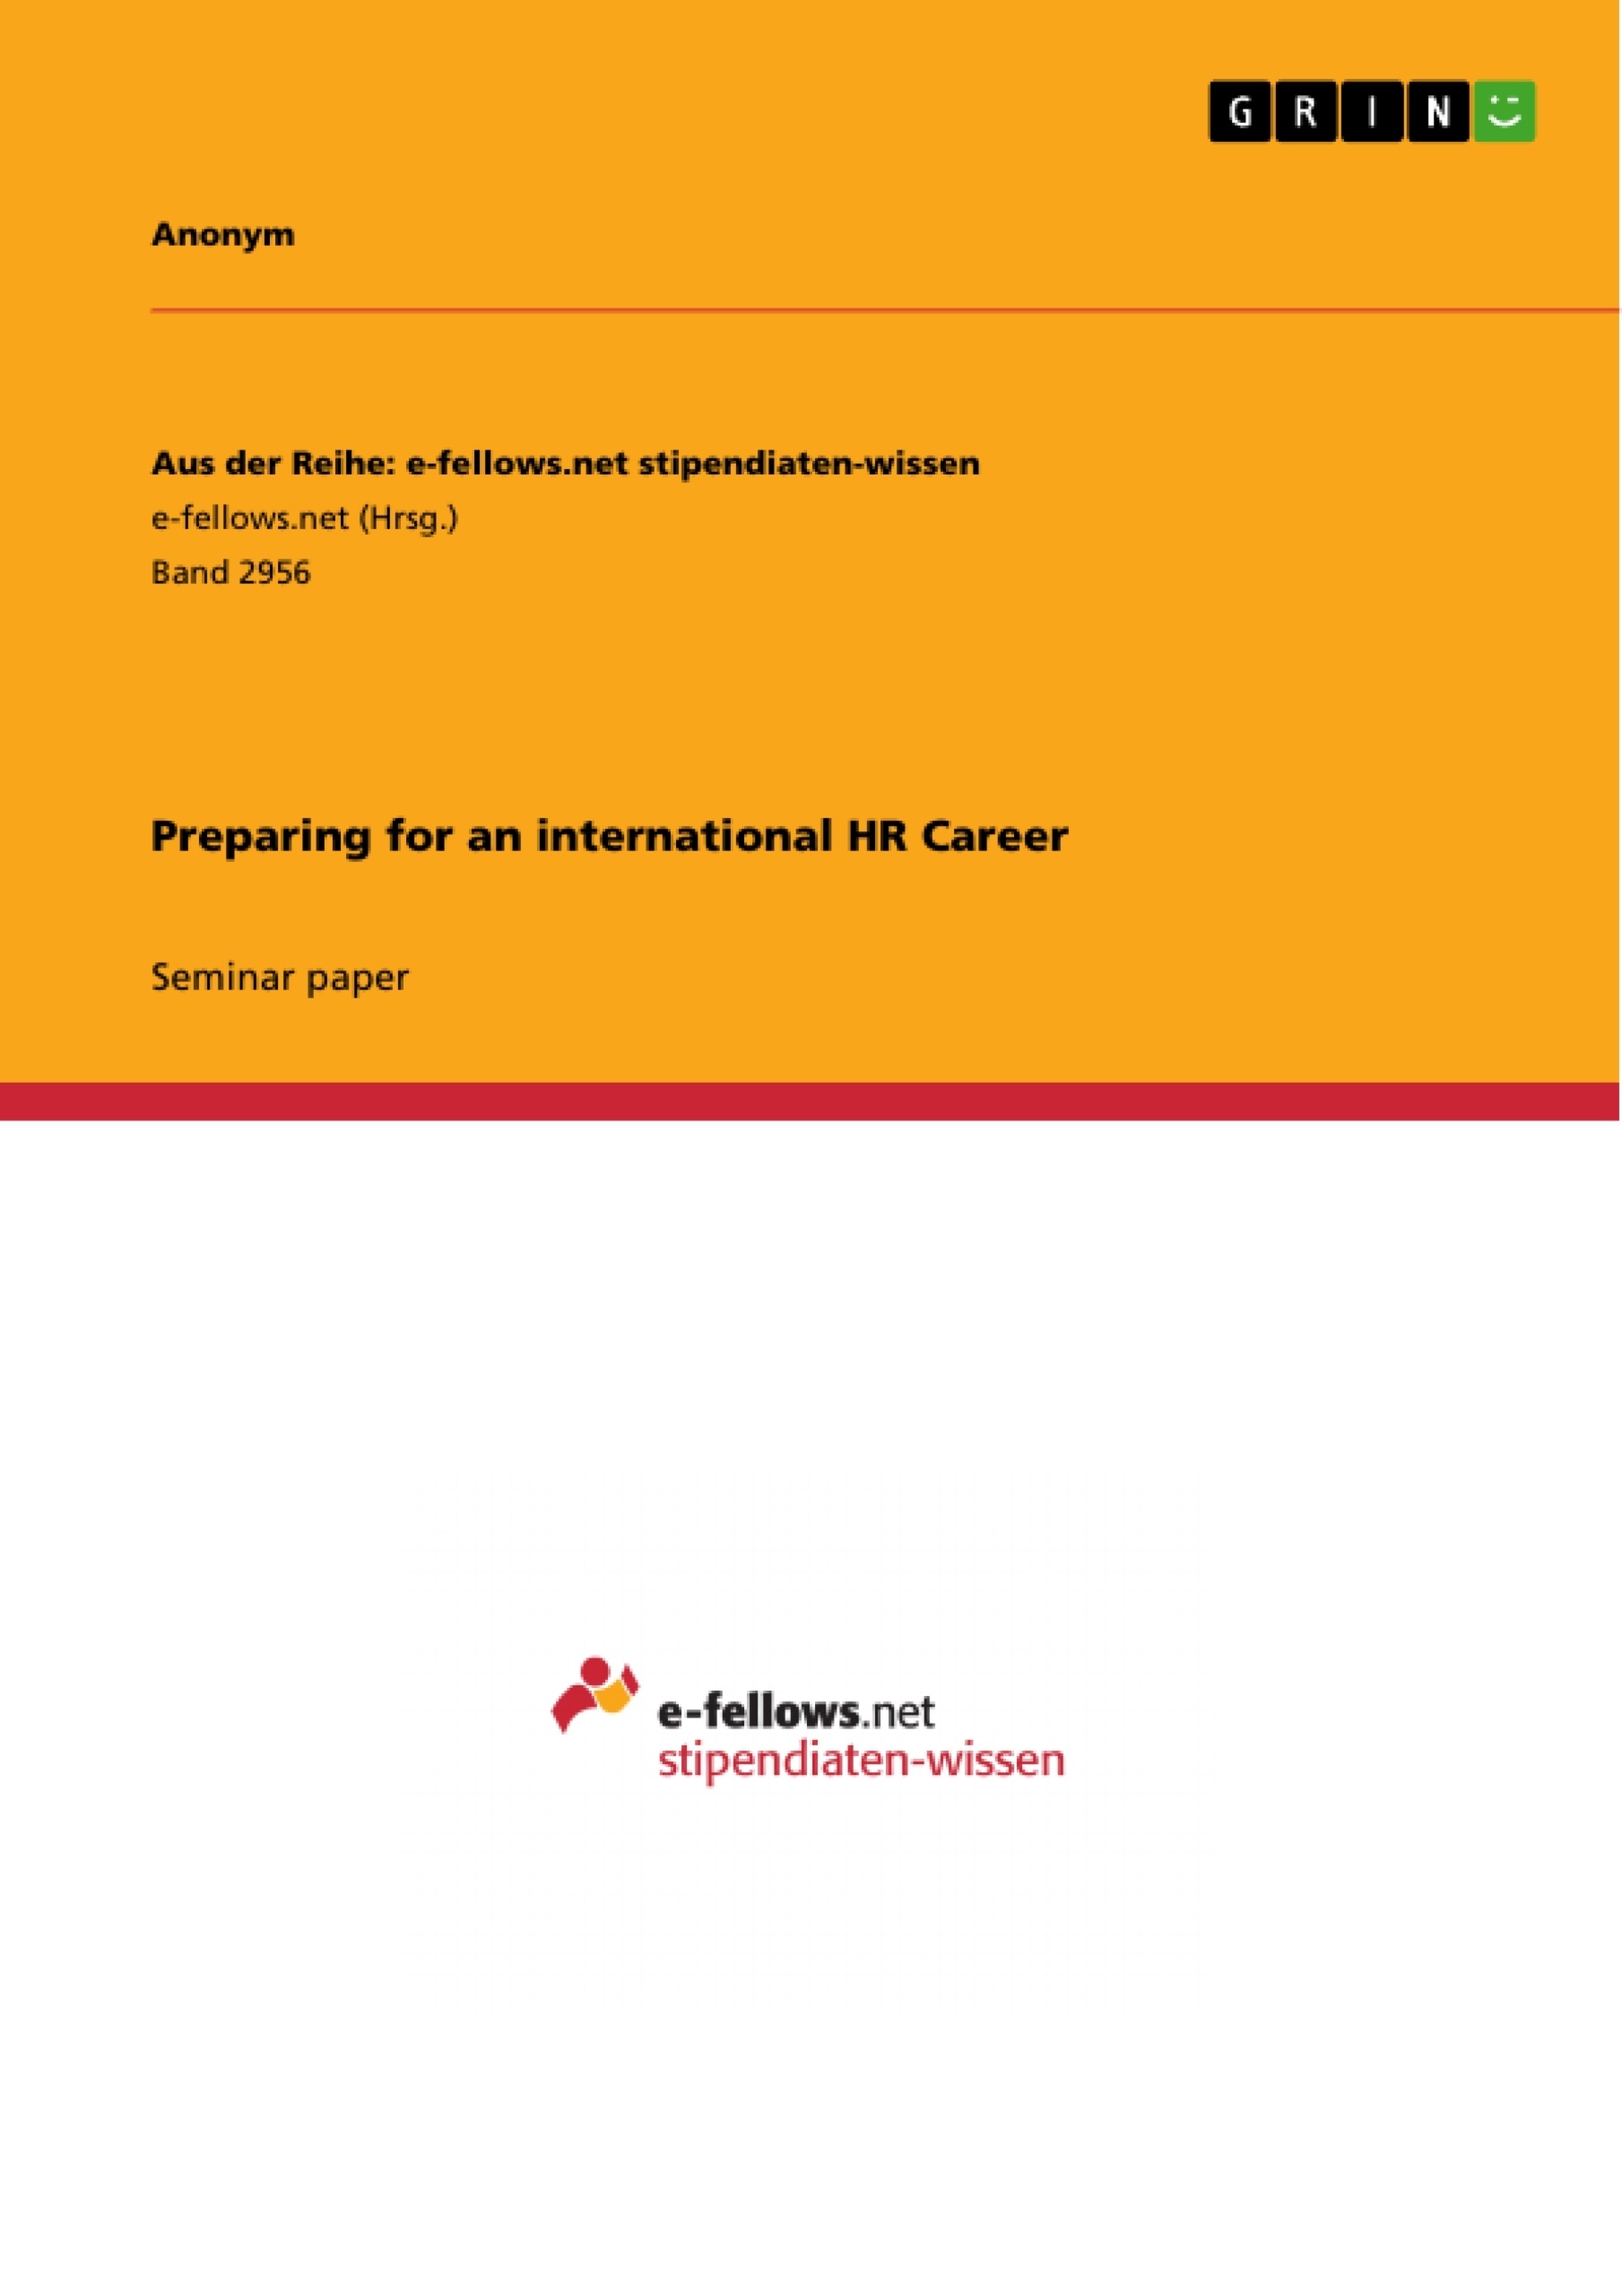 Title: Preparing for an international HR Career